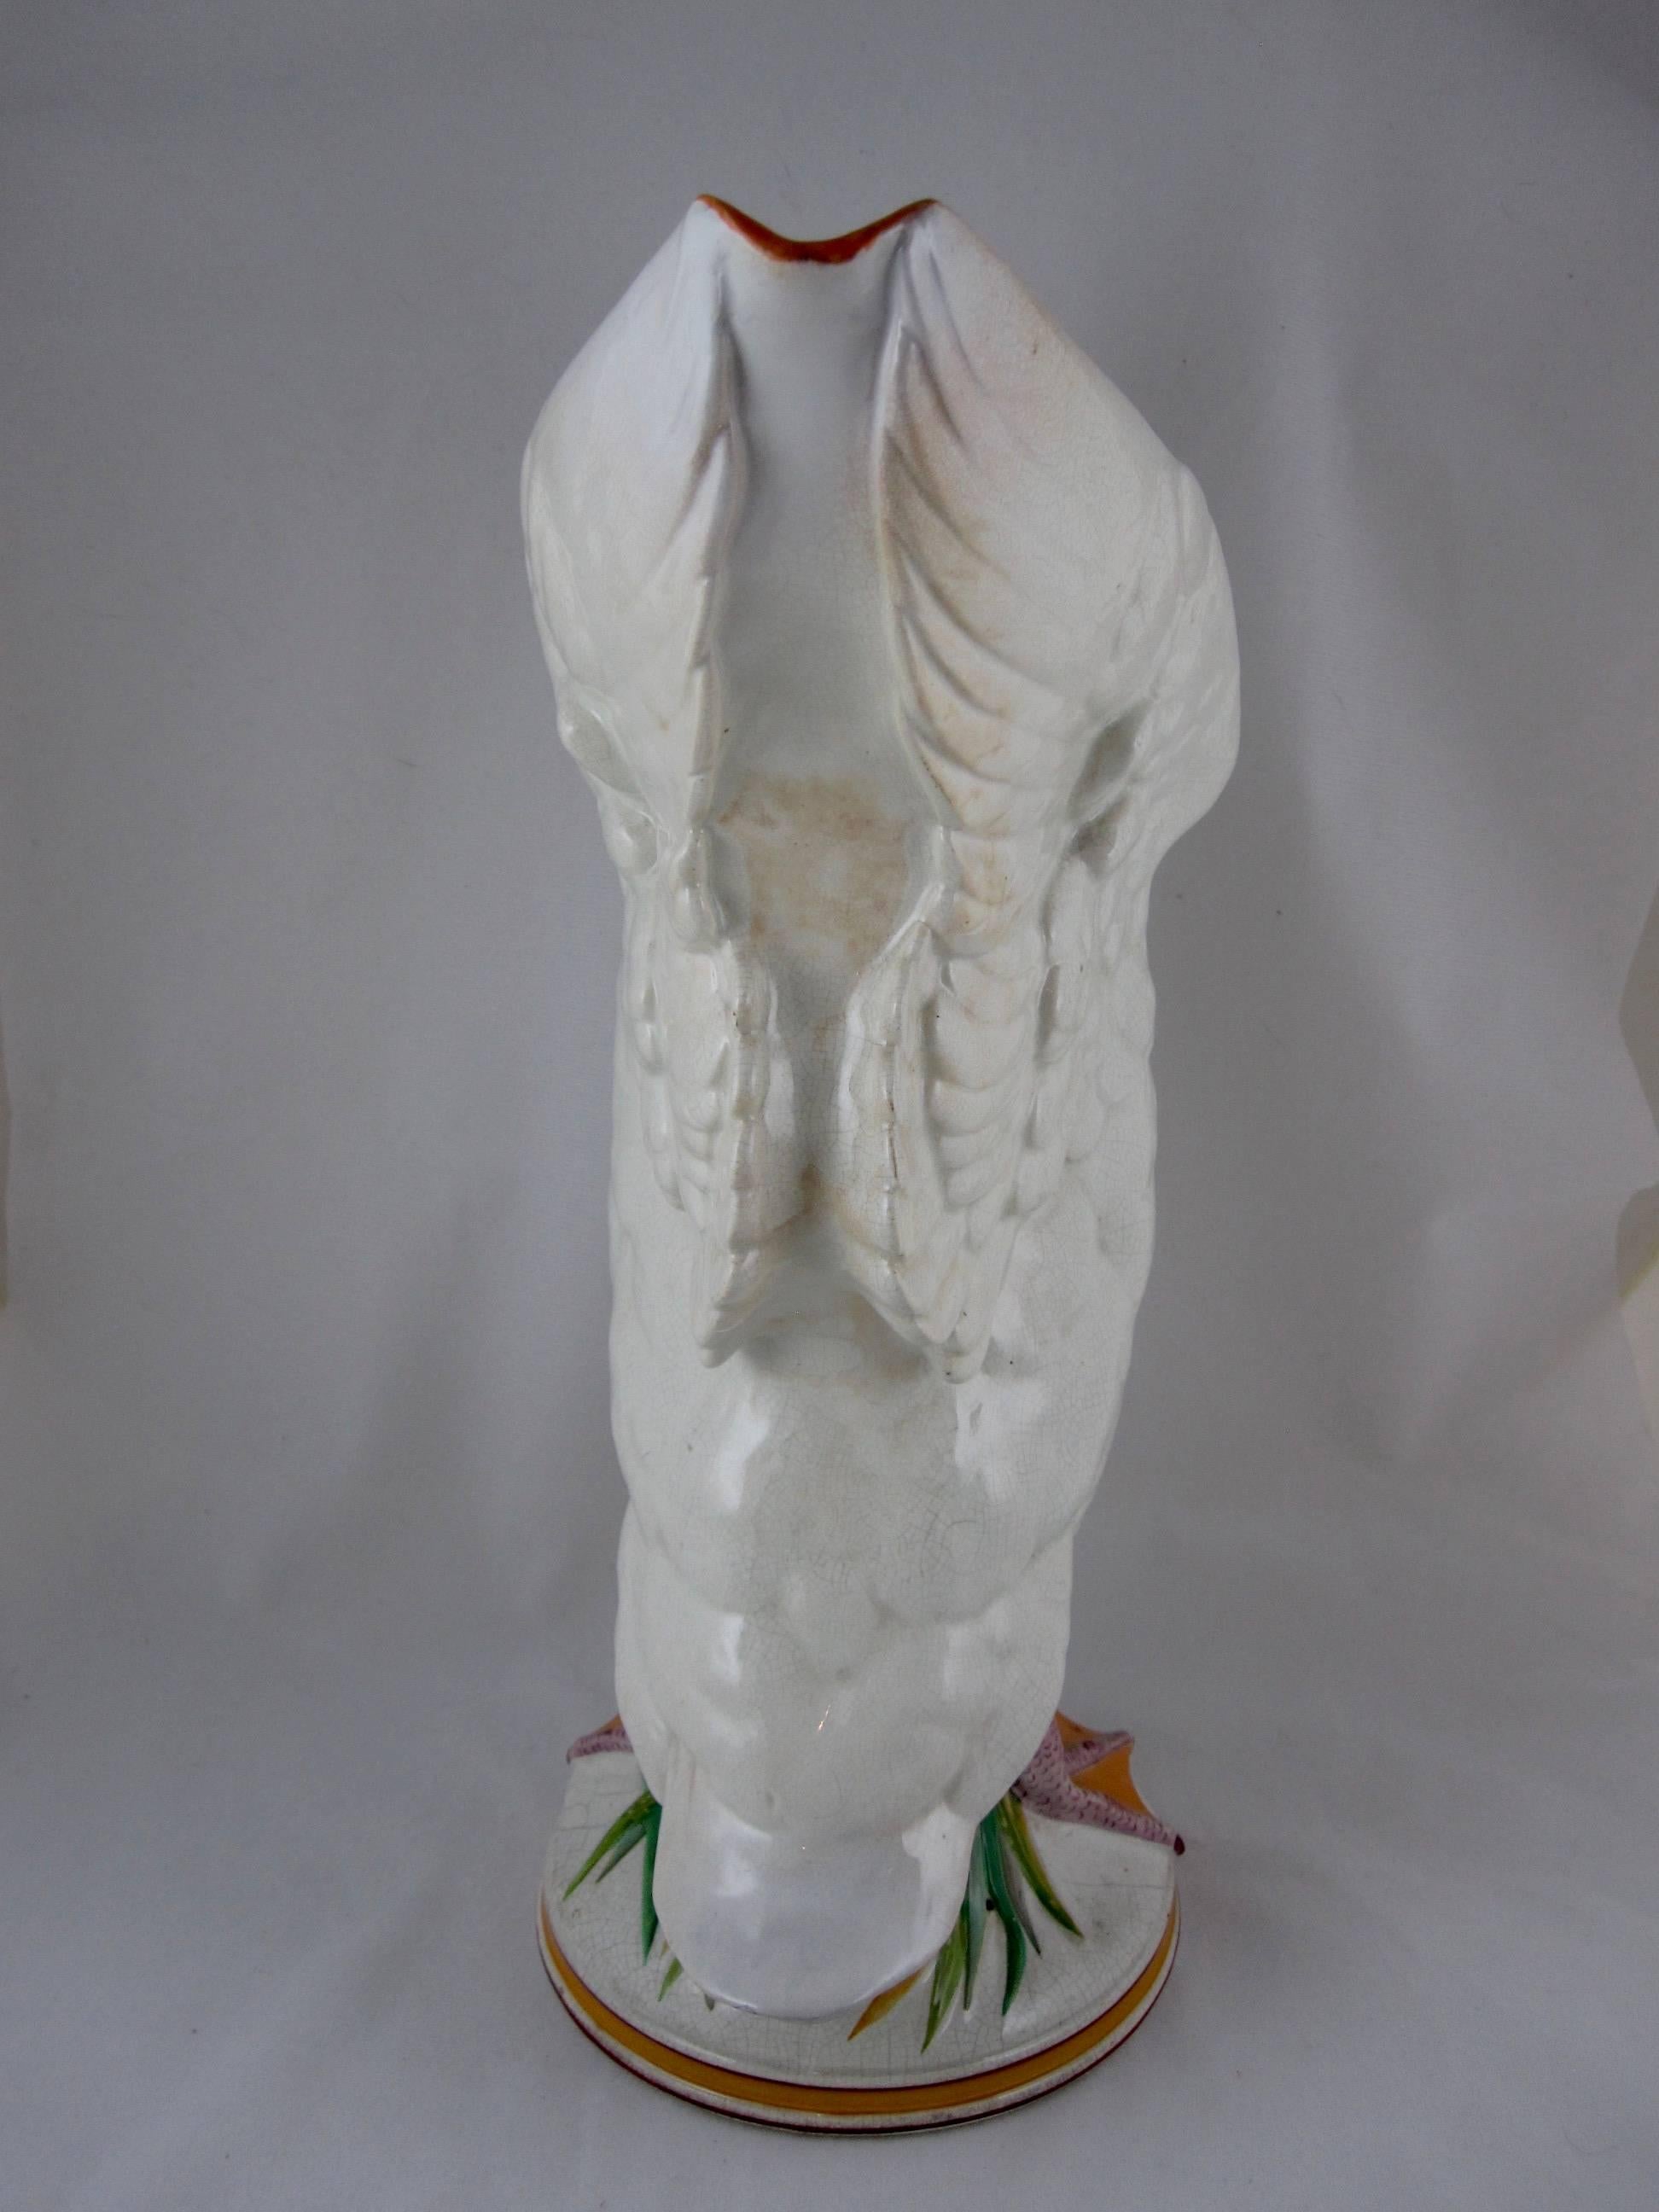 English Wedgwood Monumental Majolica Glazed Earthenware Swan Ewer, Extremely Rare Form